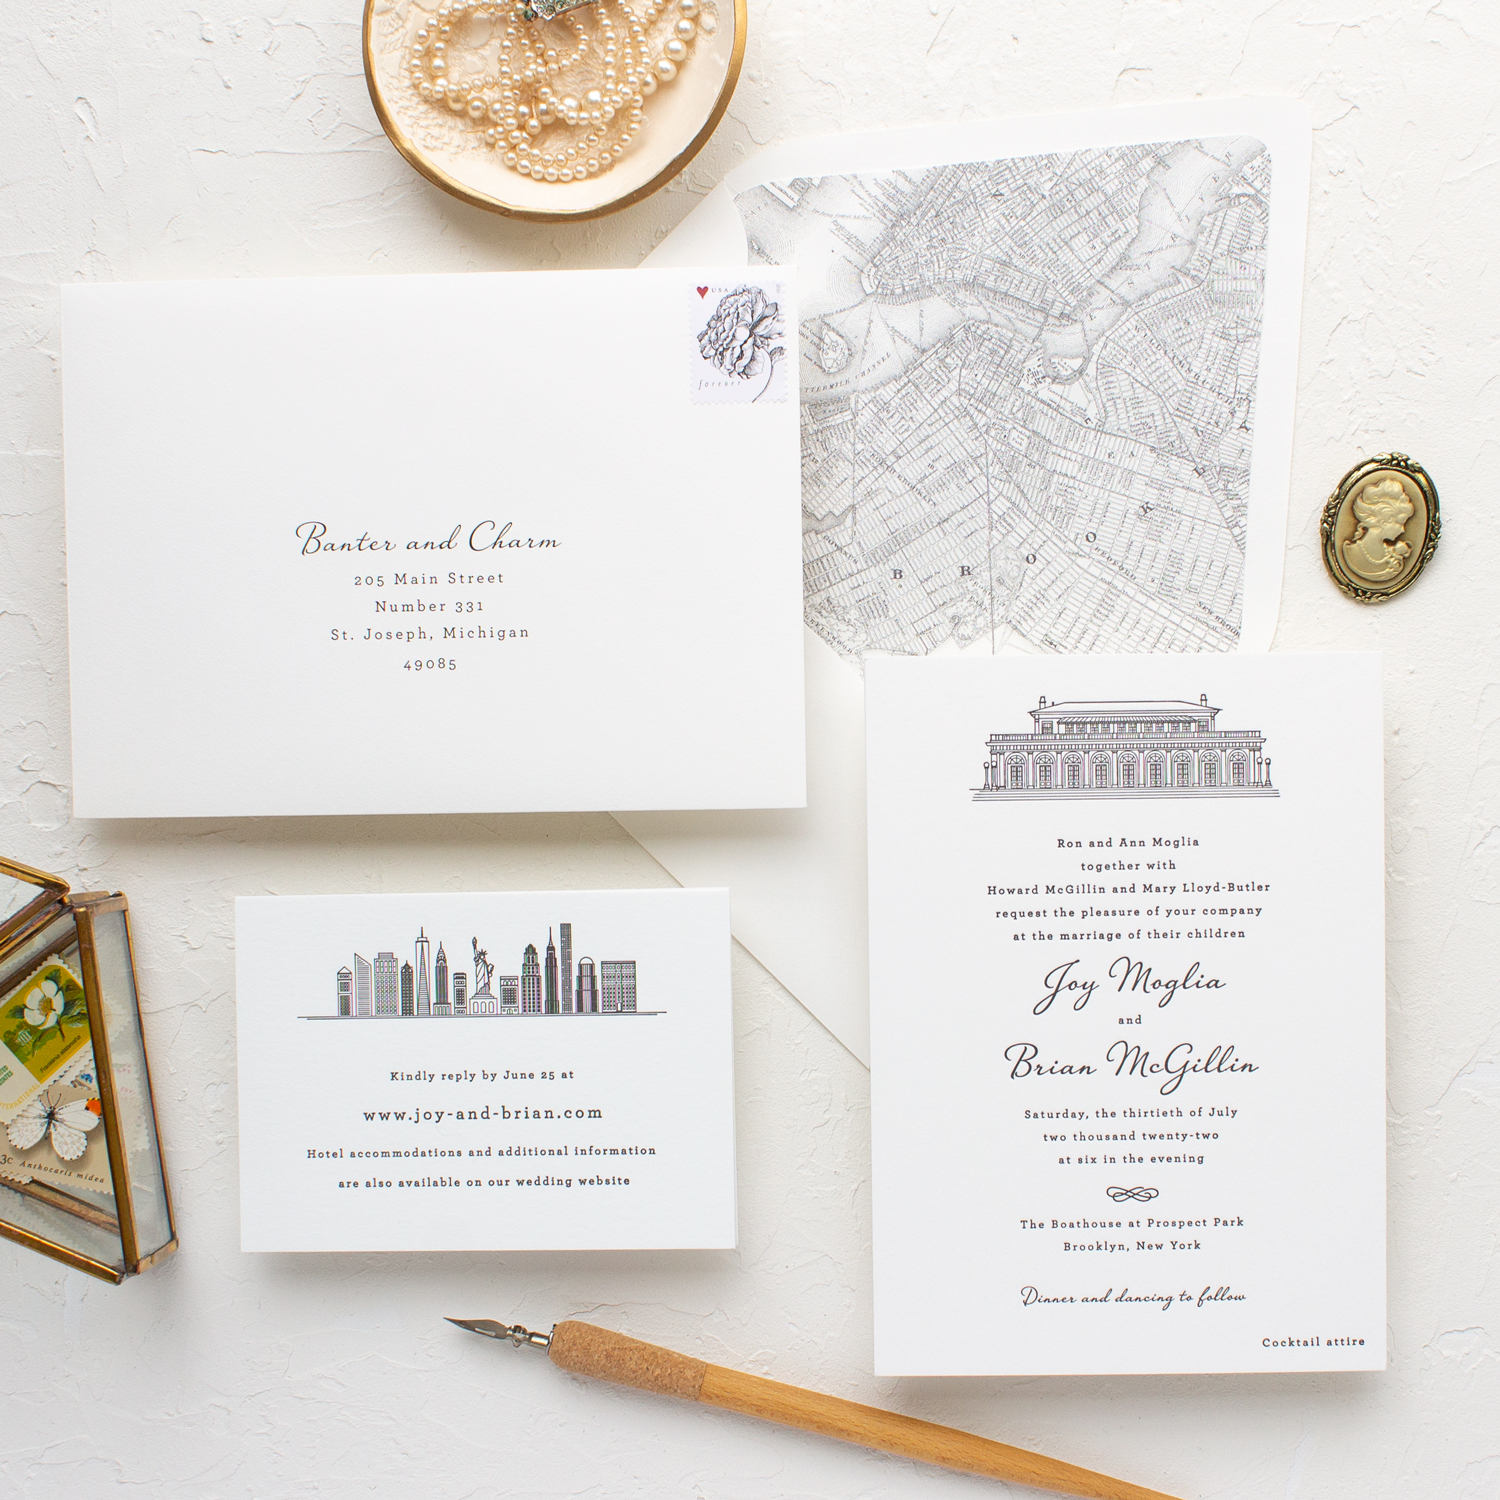 Prospect Park wedding invitations